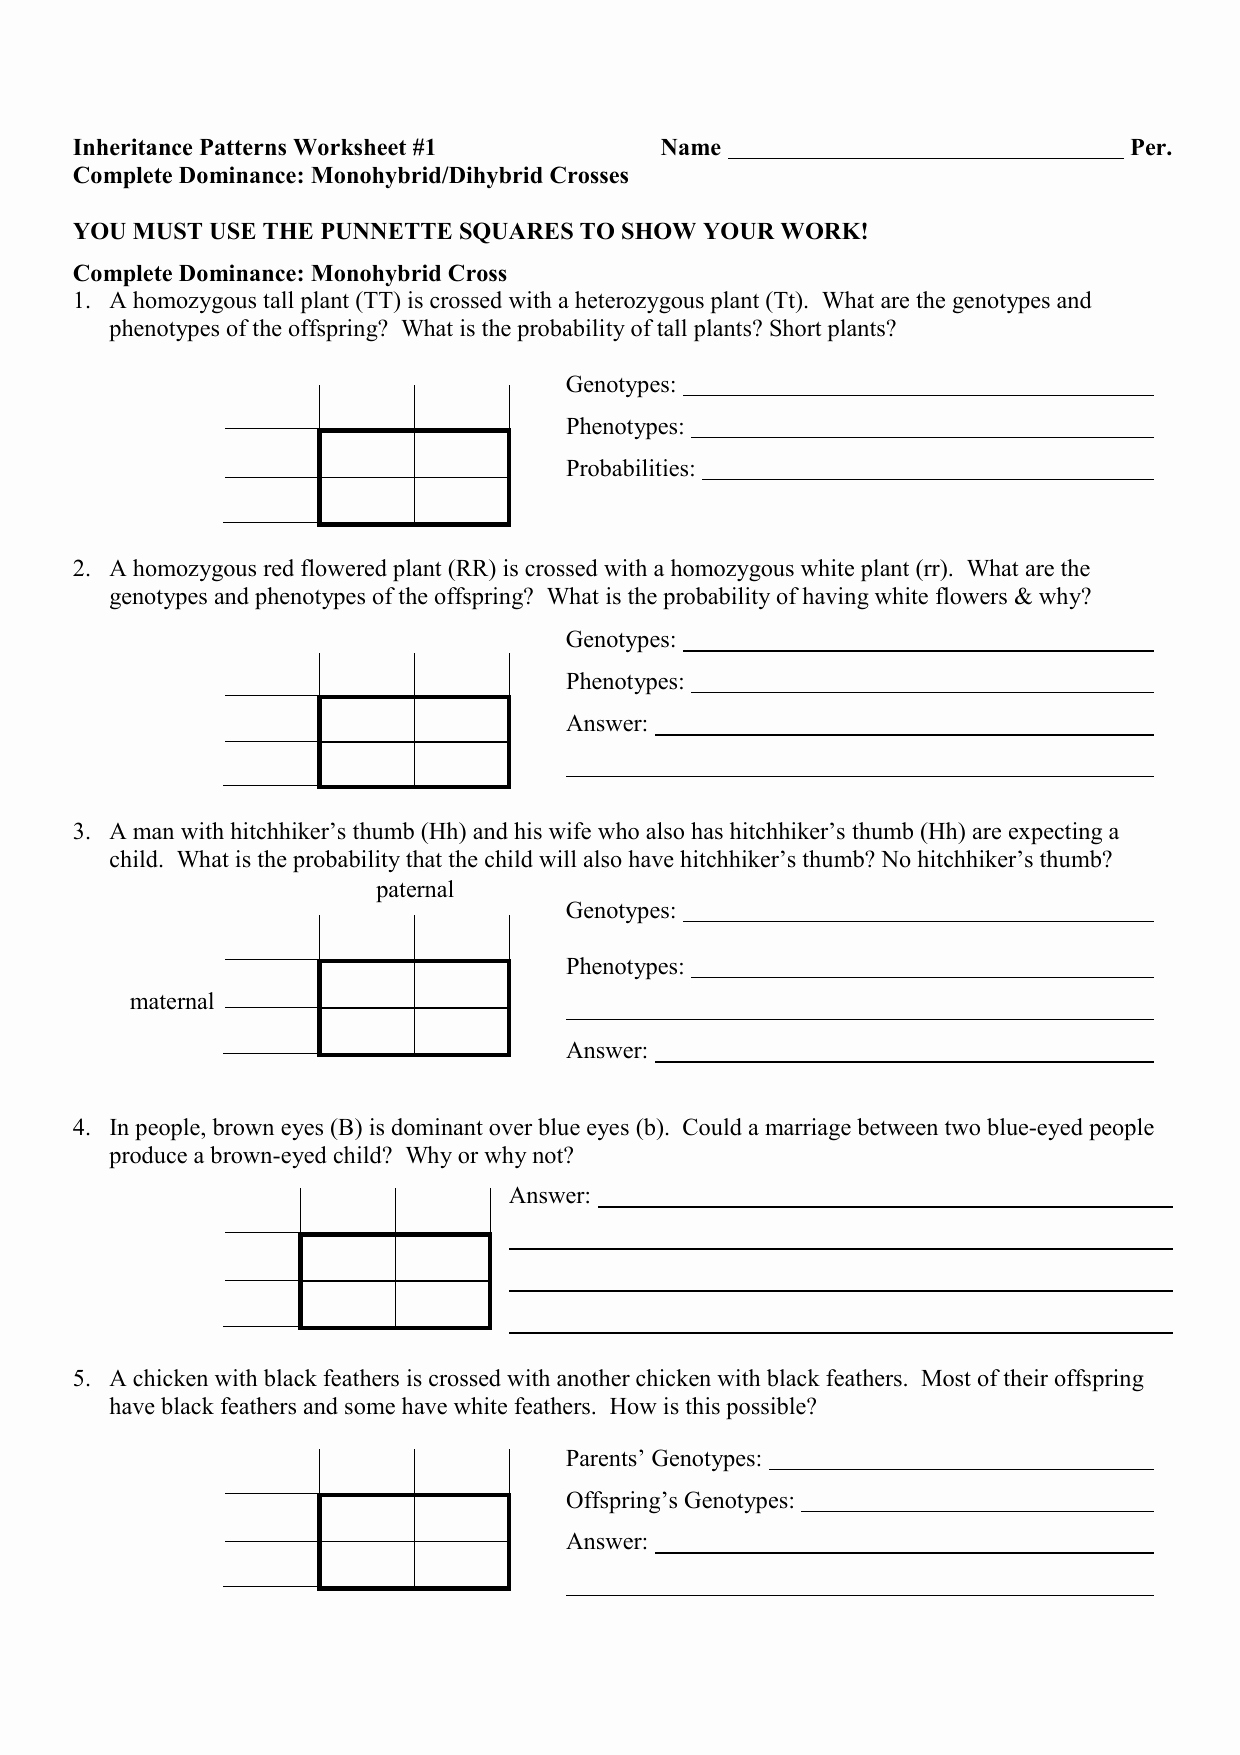 Monohybrid Crosses Worksheet Answers Elegant Monohybrid and Dihybrid Crosses Worksheet